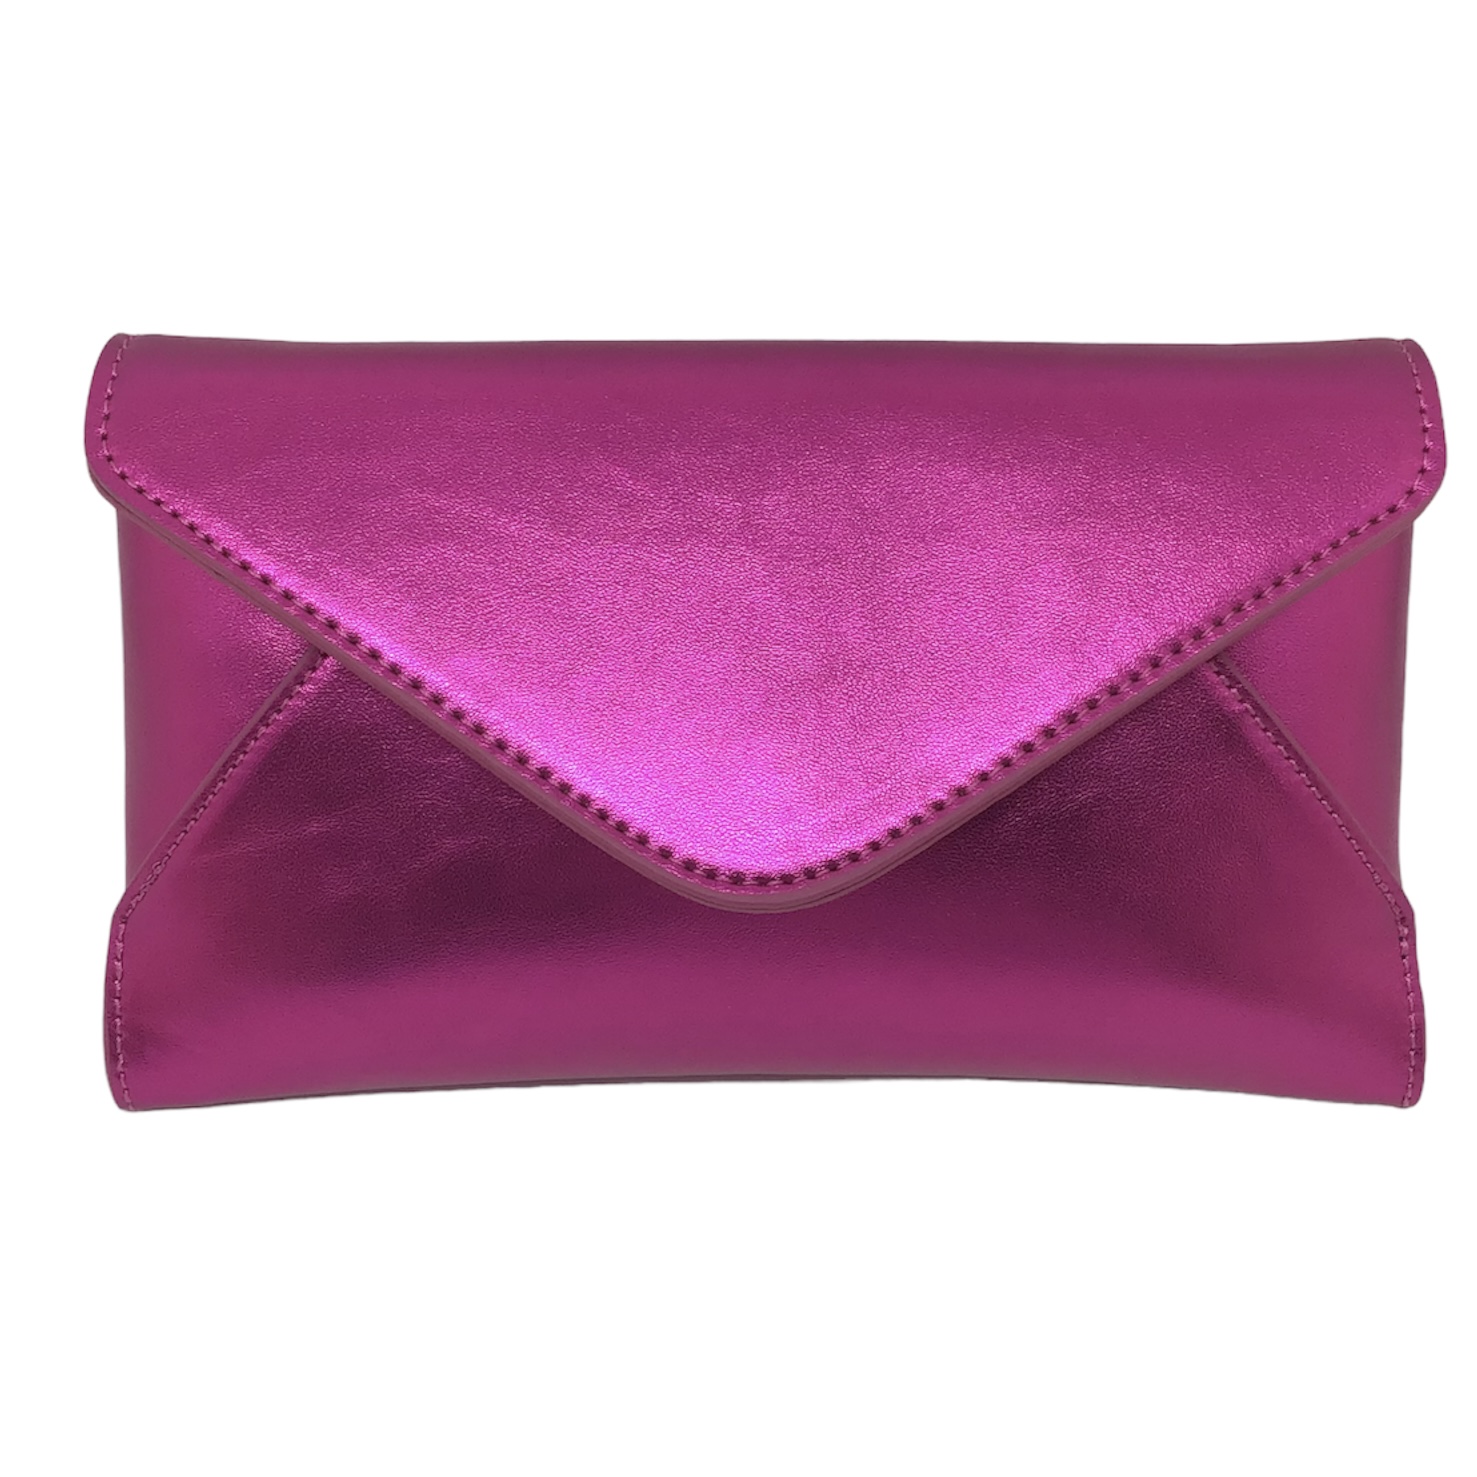 Pink Satin Clutch Purse Elegant Box Evening Bag | Wedding clutch purse,  Wedding bag, Clutch purse